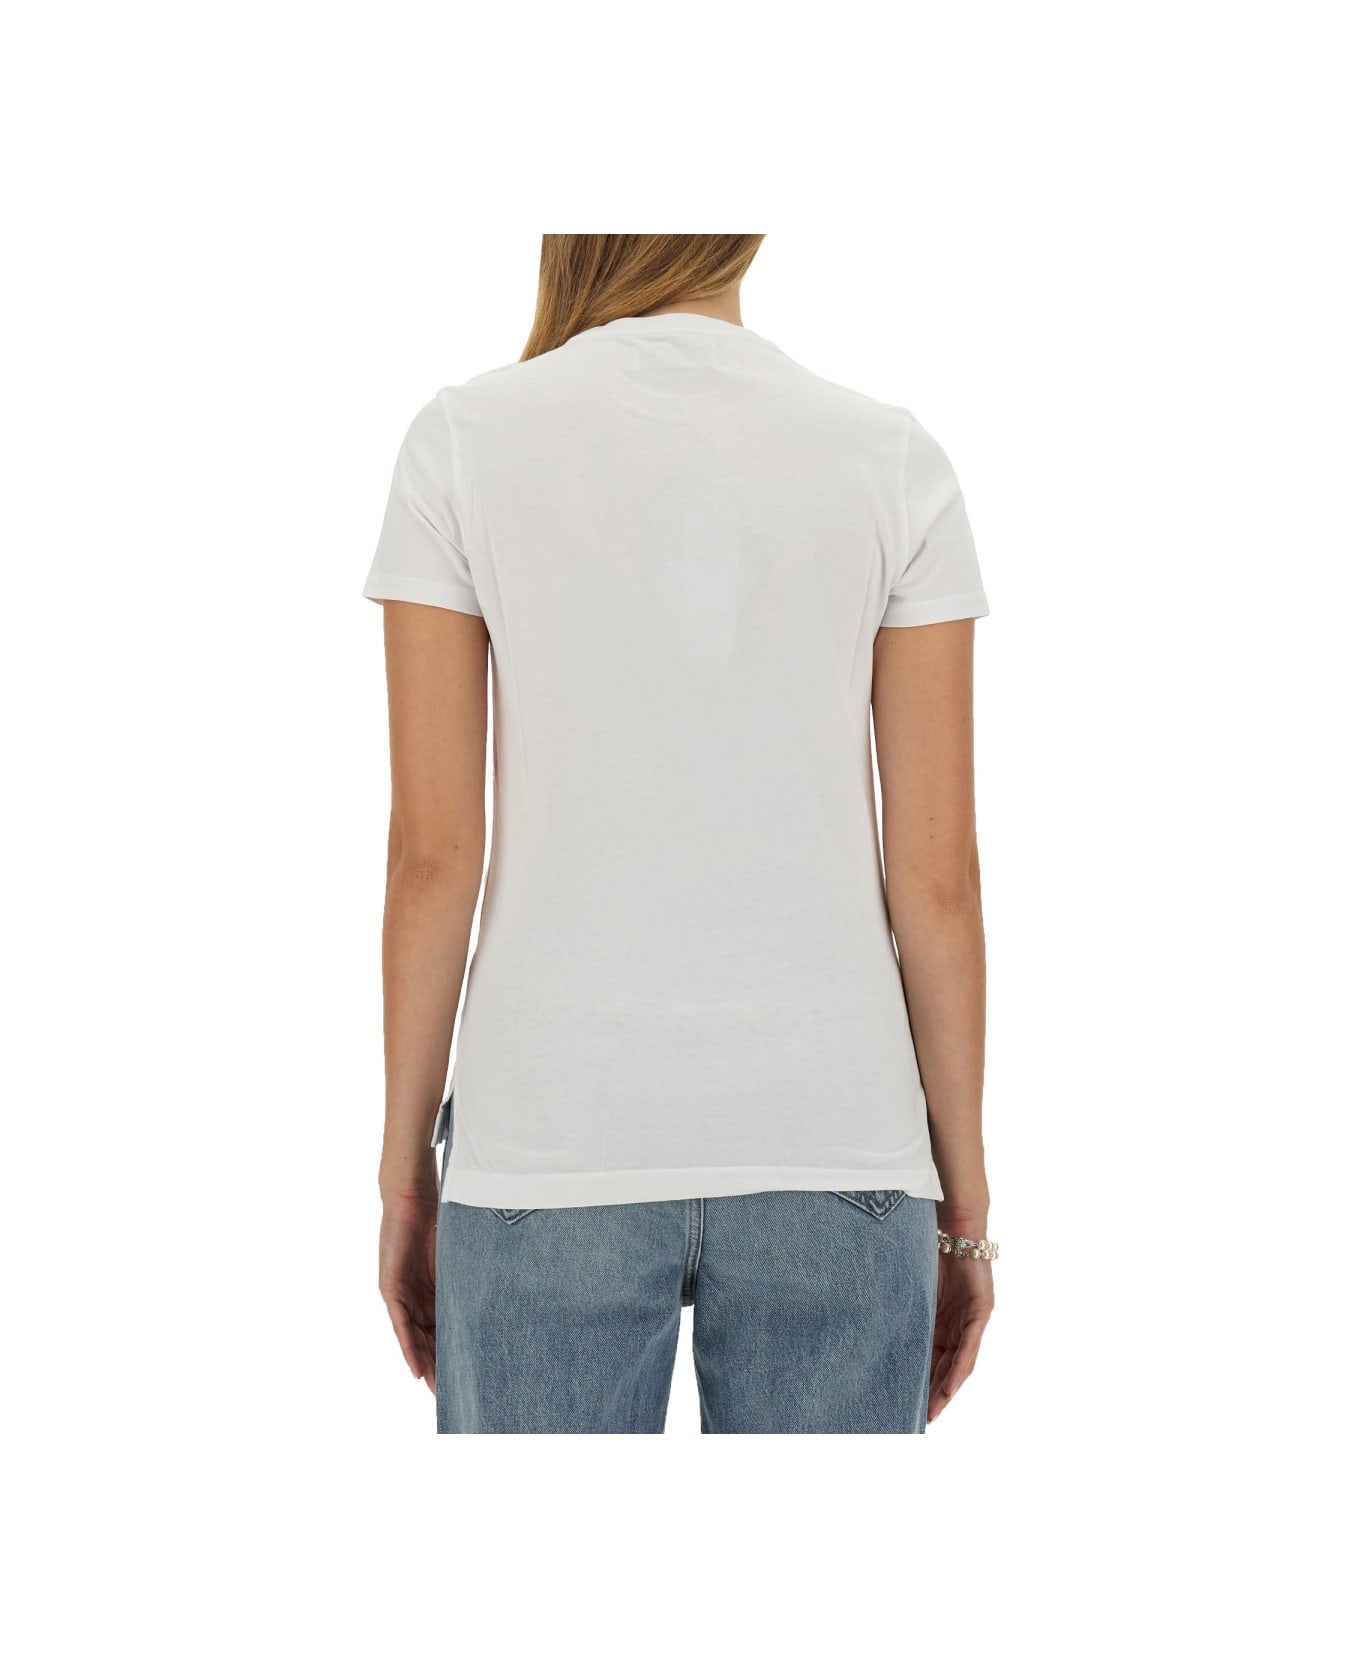 Vivienne Westwood Orb Peru T-shirt - WHITE